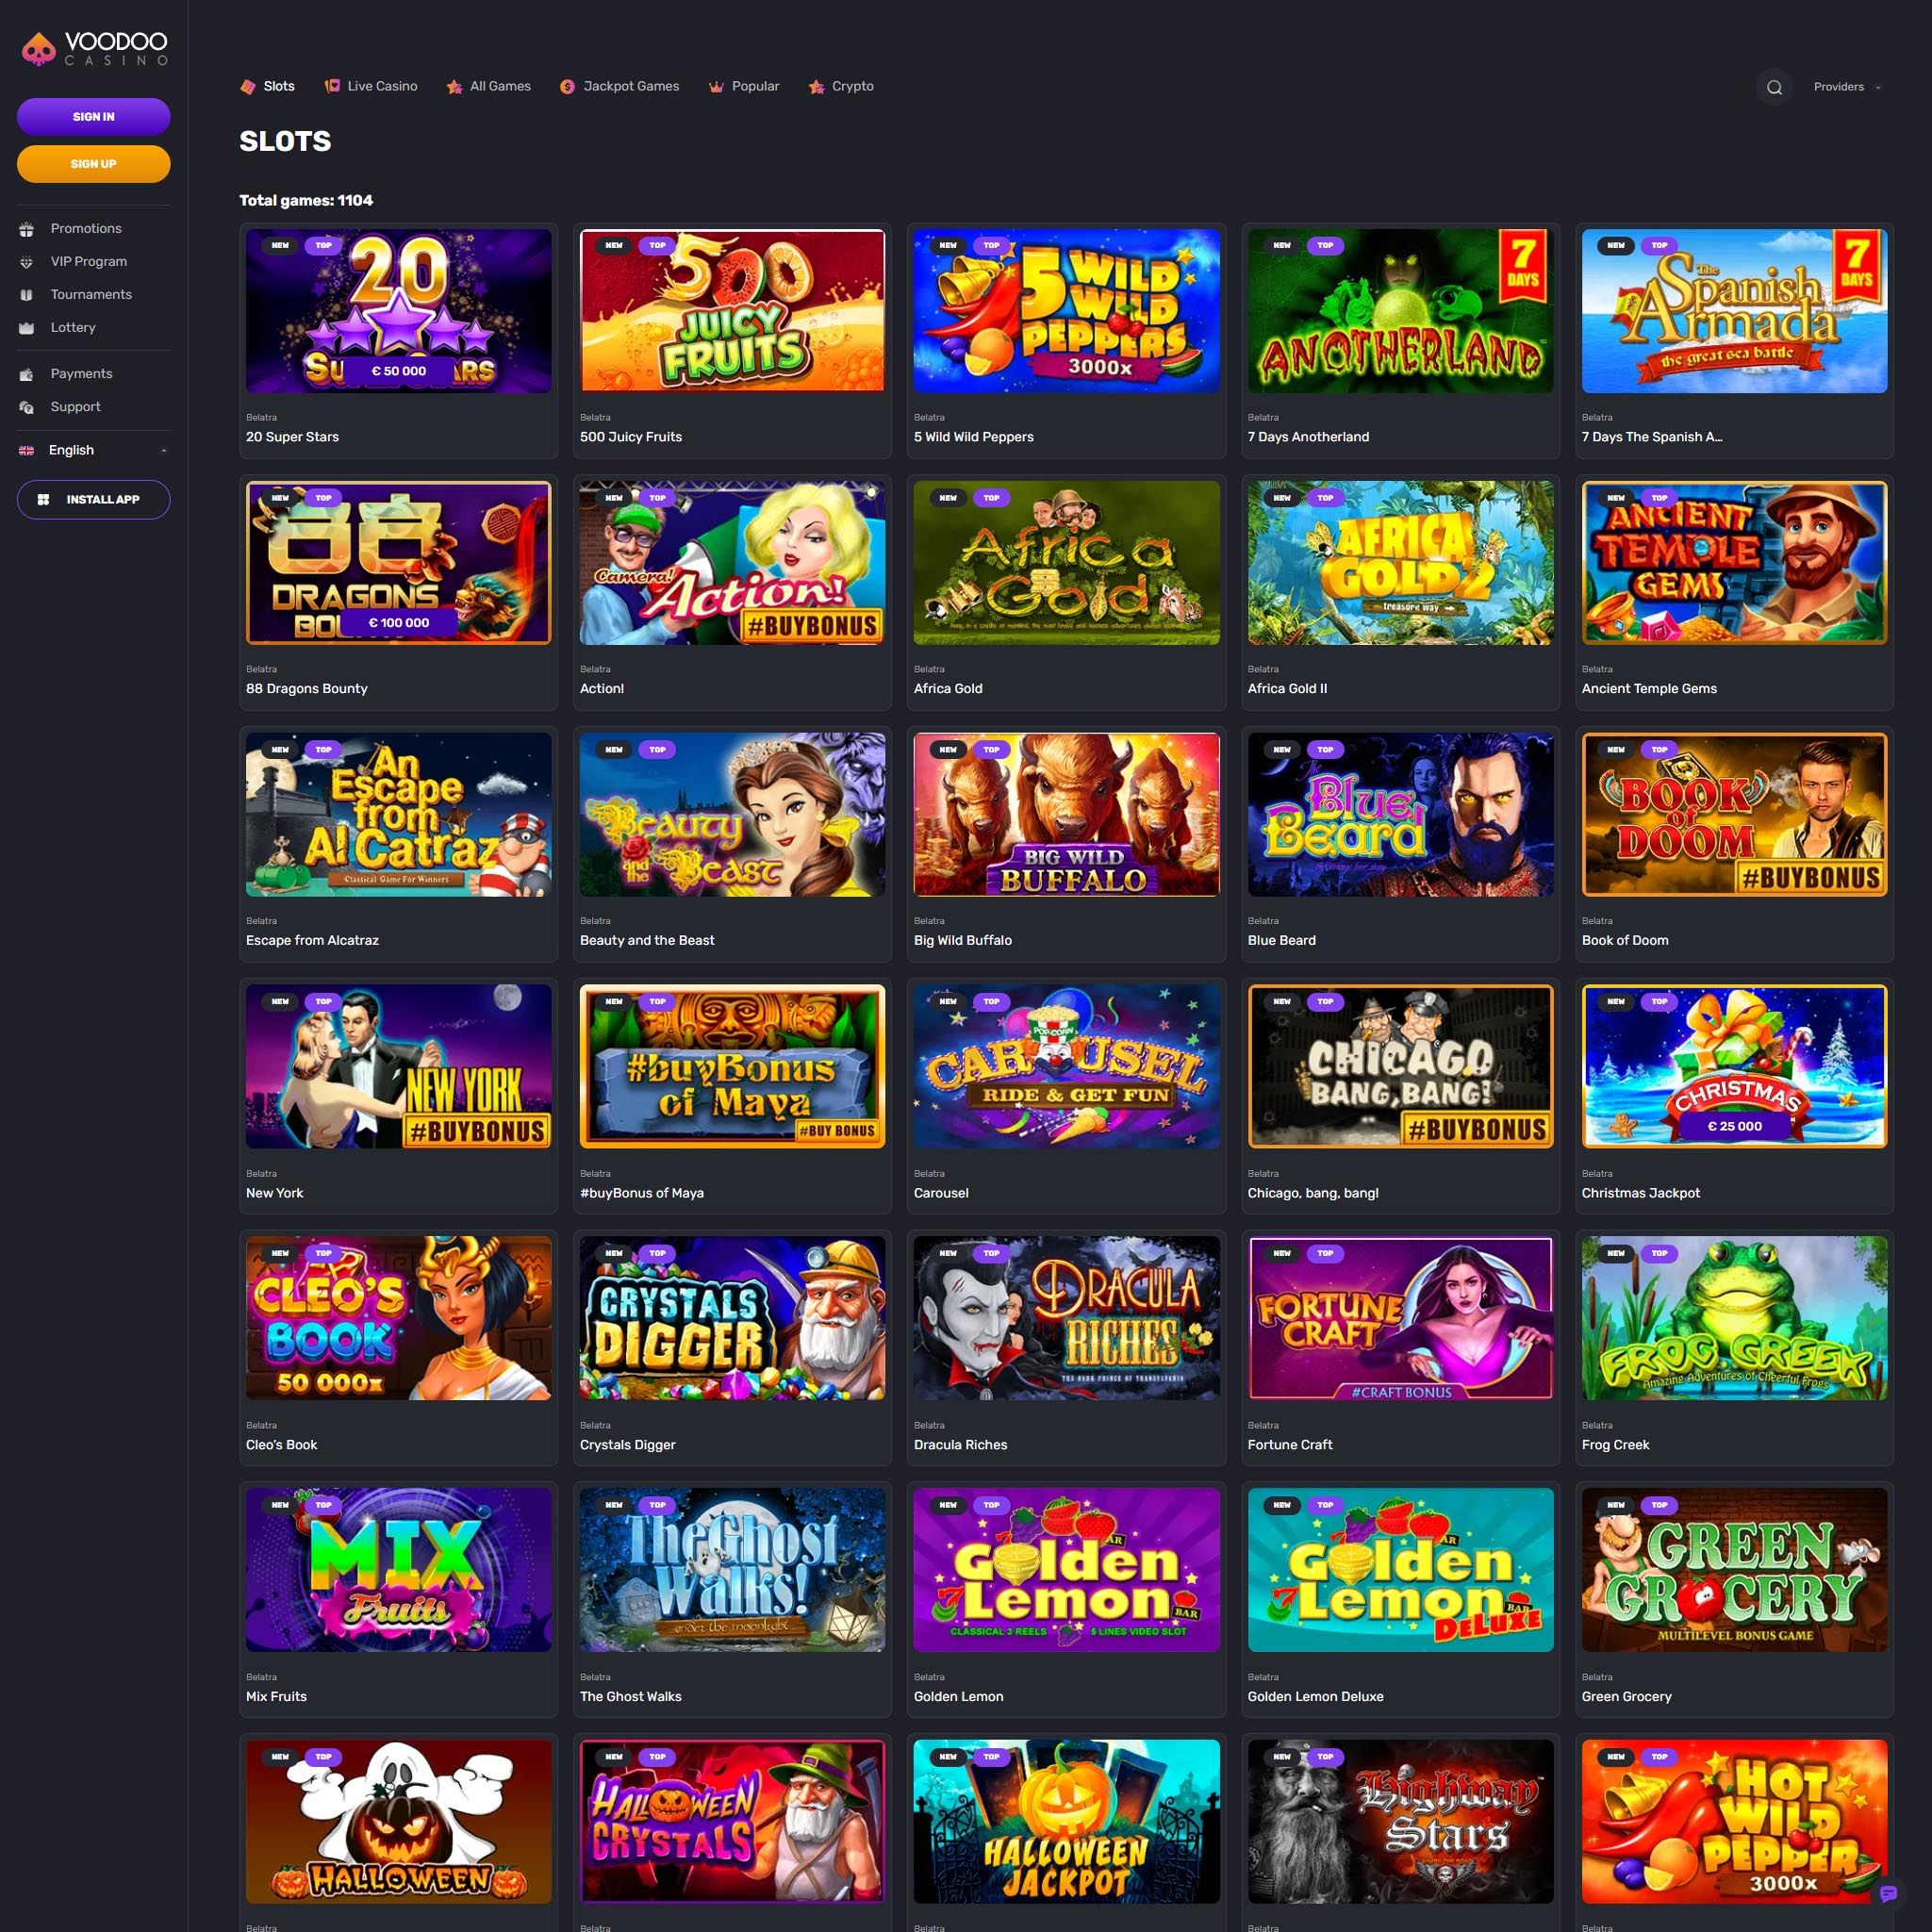 Voodoo Casino full games catalogue